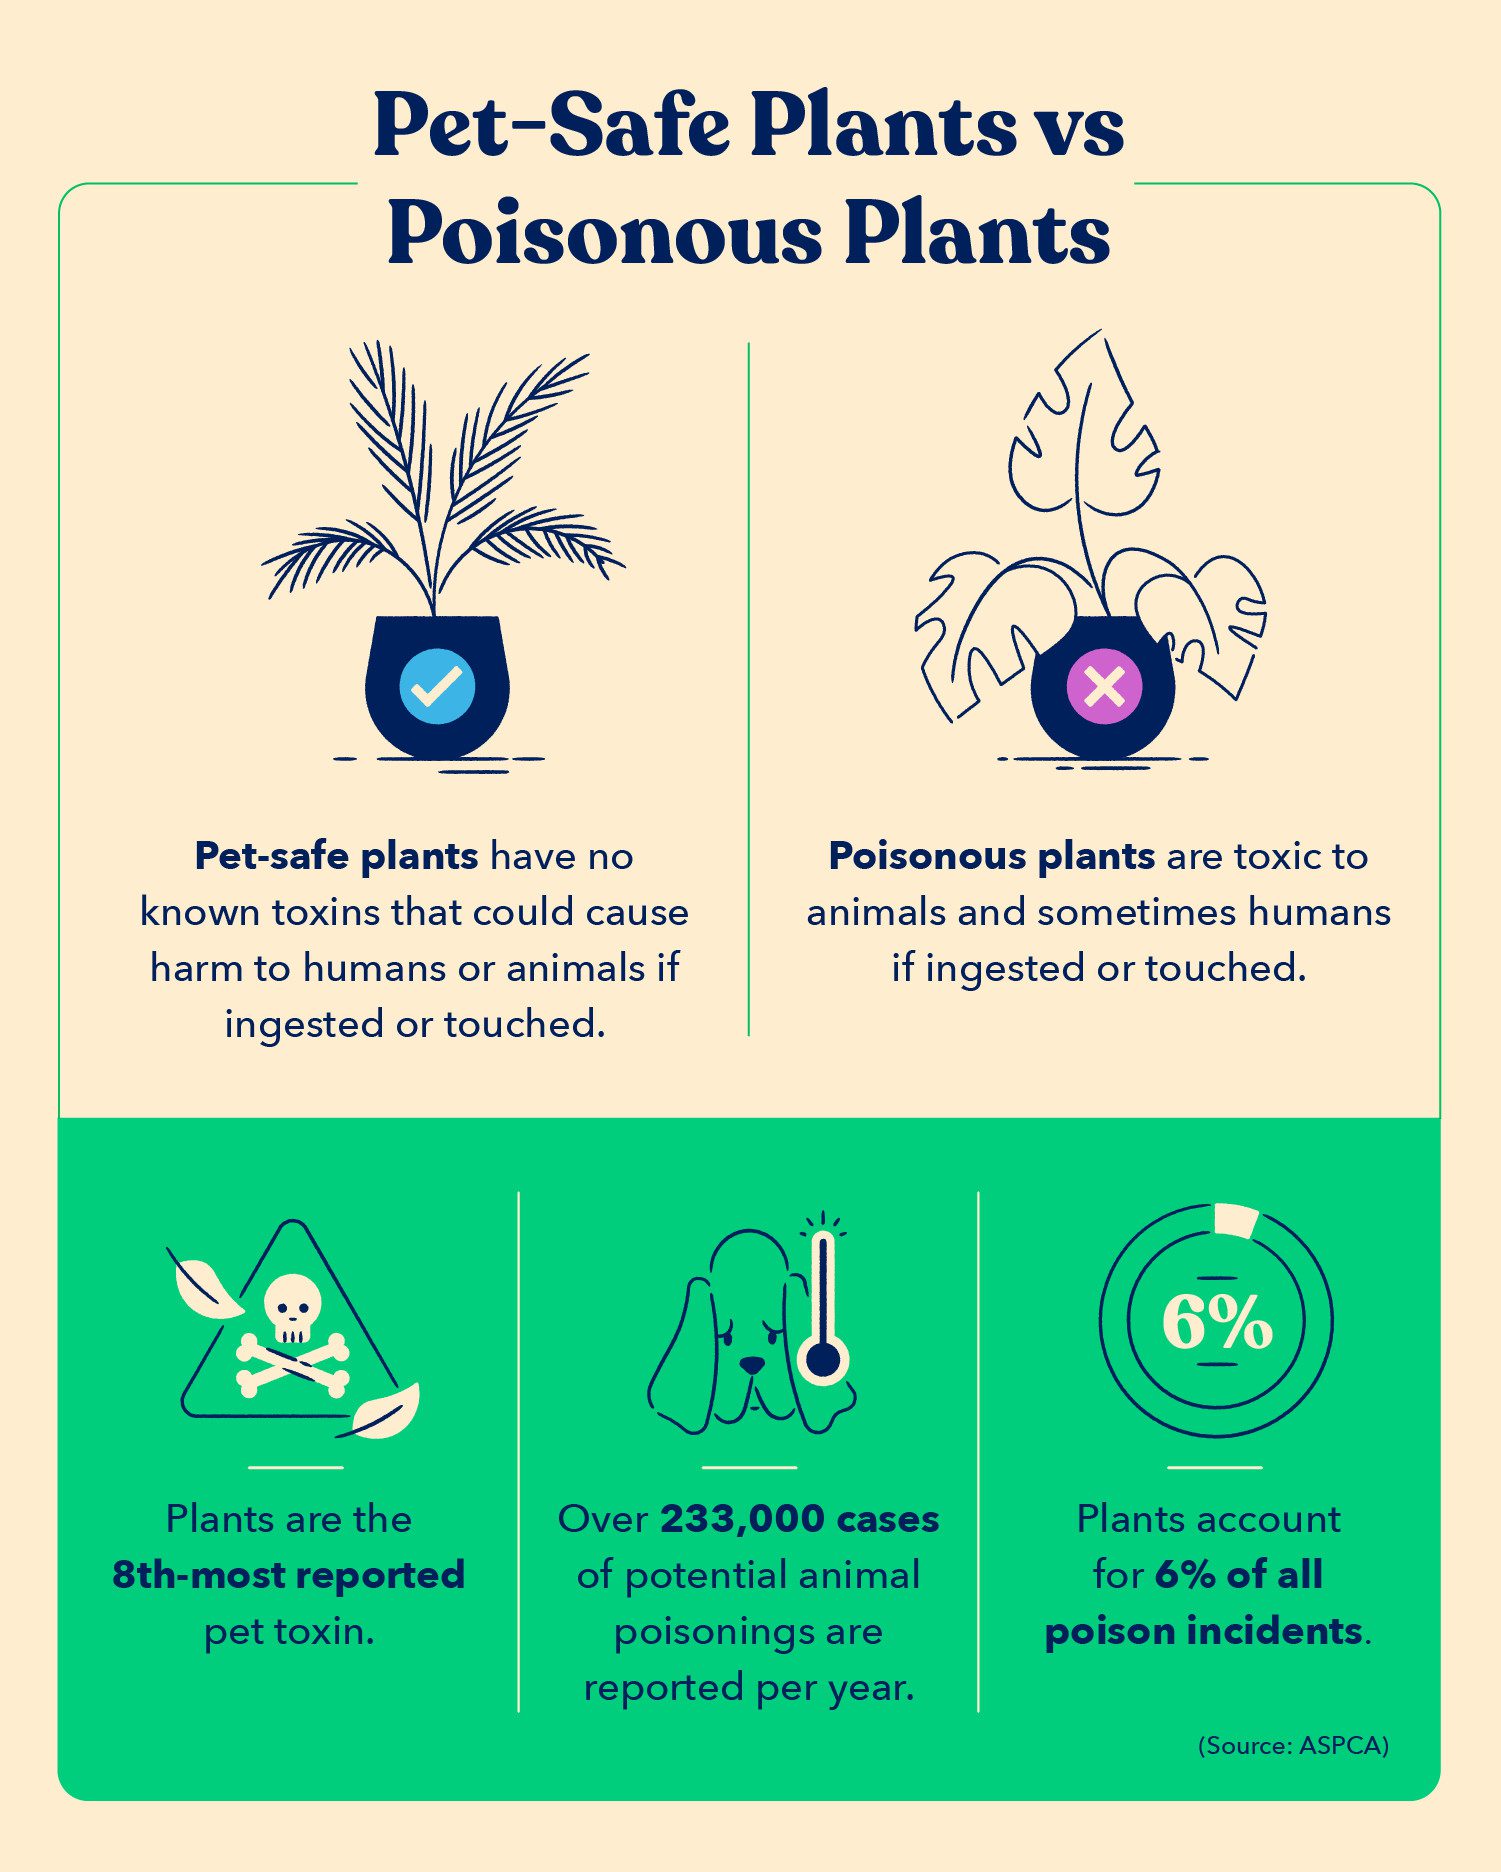 an explanation of pet-safe plants versus toxic plants to pets, plus ASPCA statistics on pet poisonings